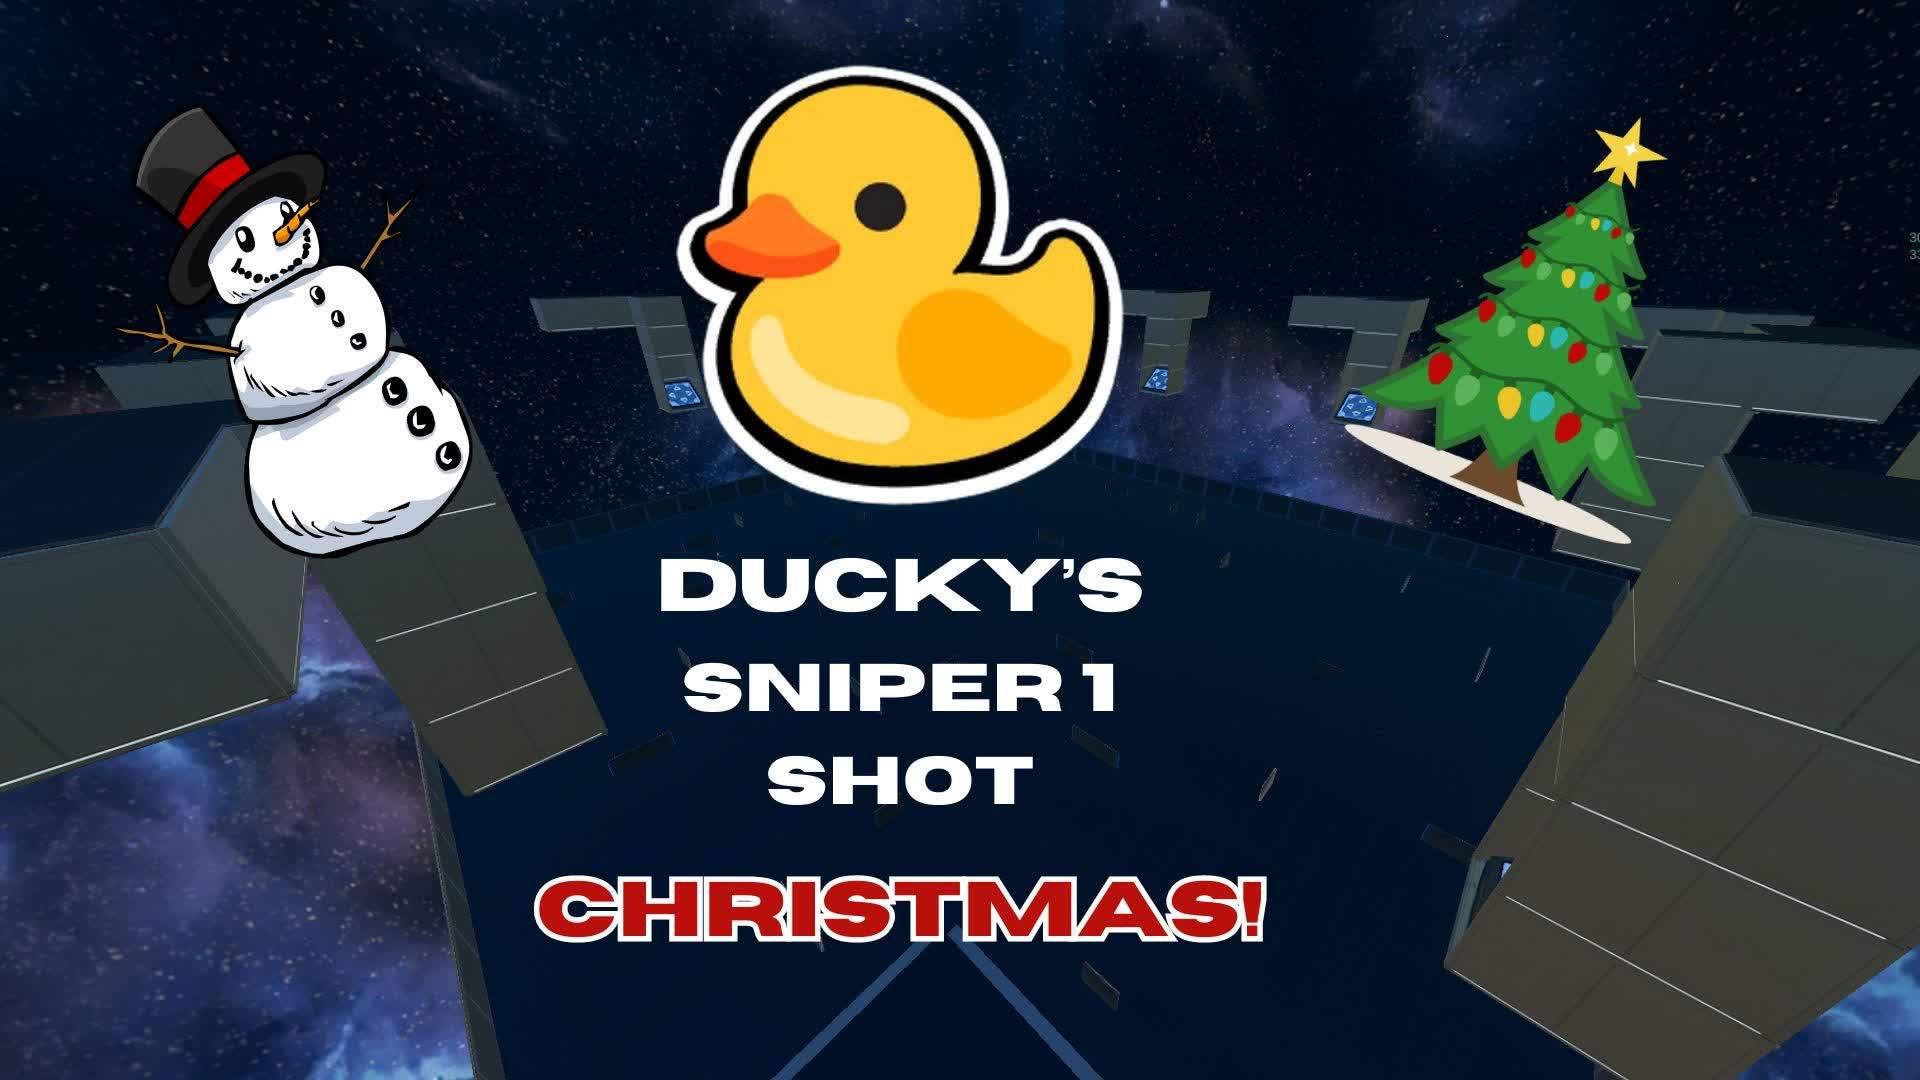 DUCKY's SNIPER 1 SHOT